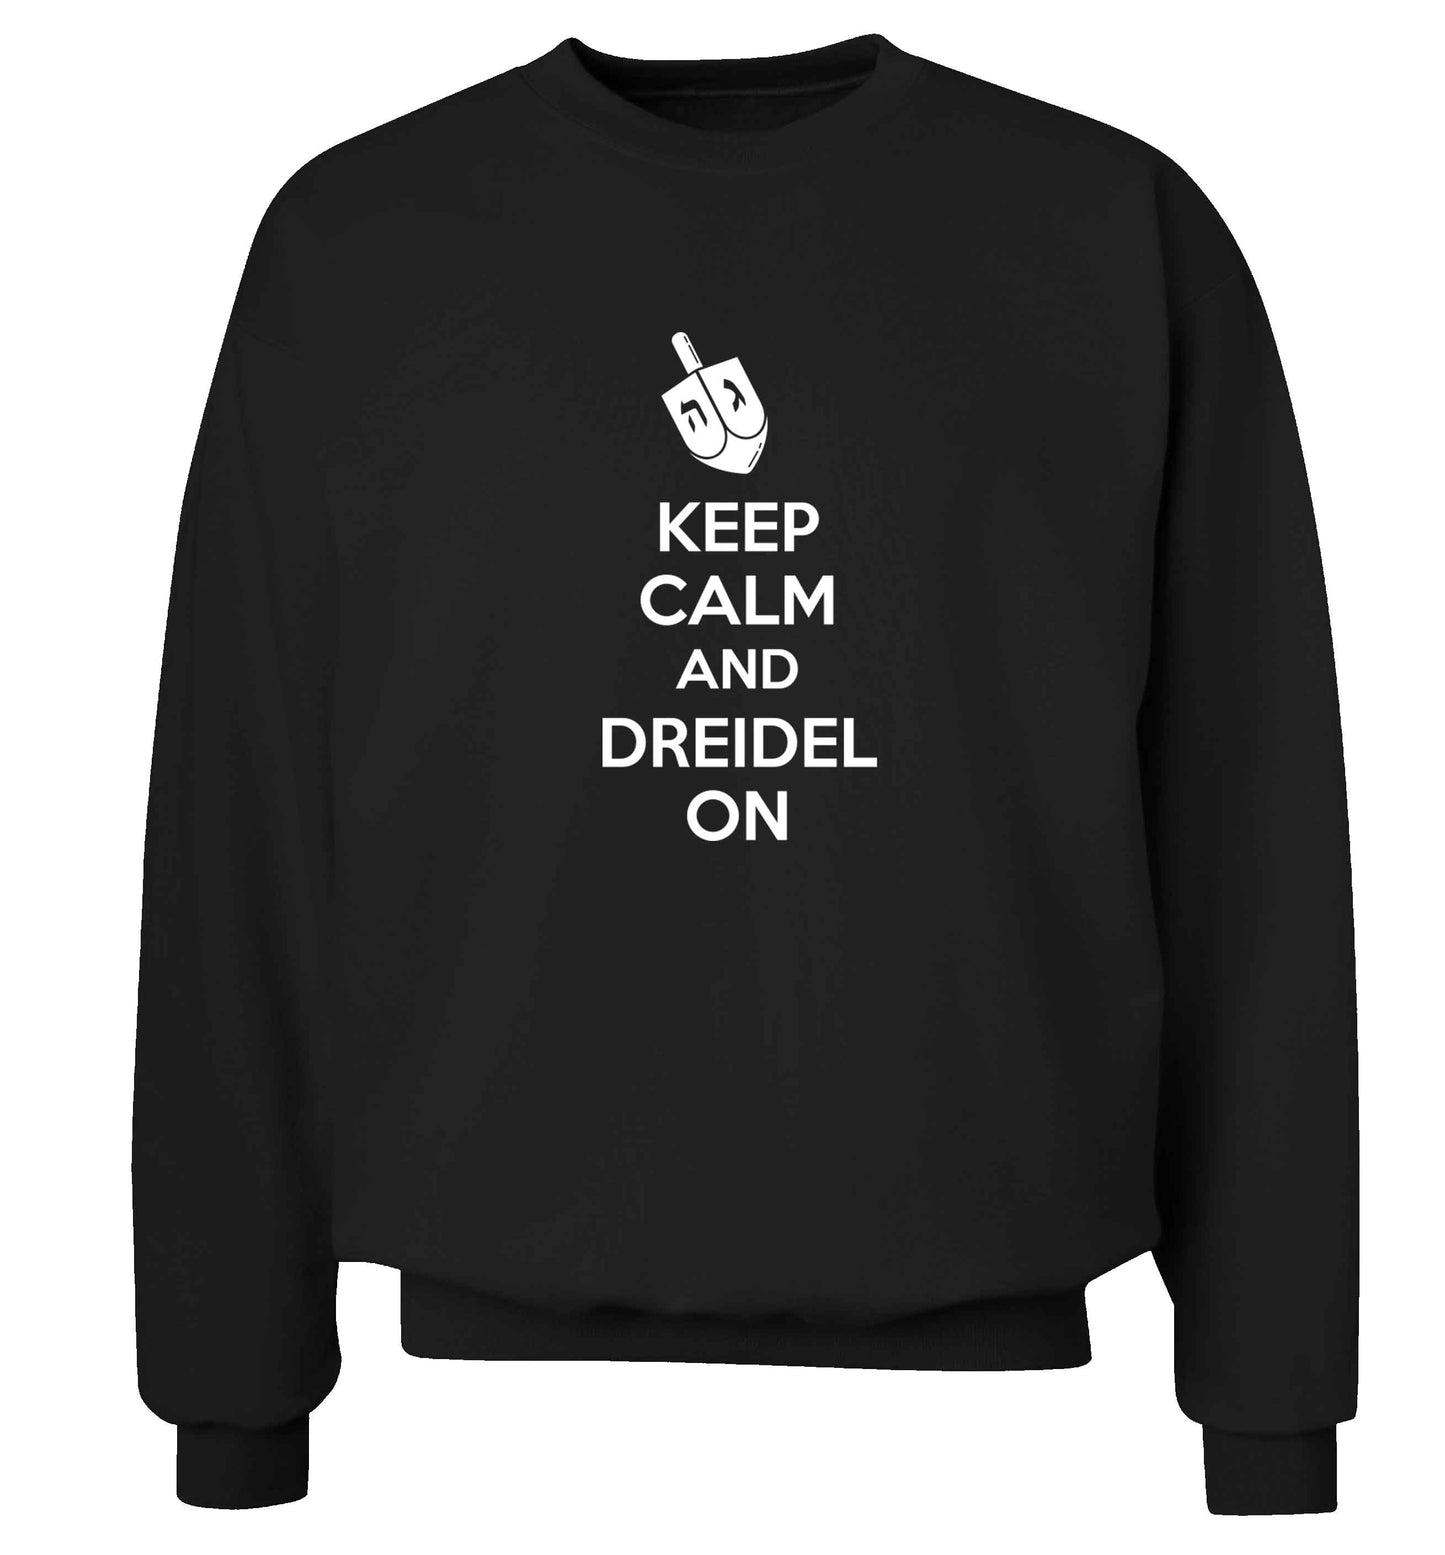 Keep calm and dreidel on adult's unisex black sweater 2XL